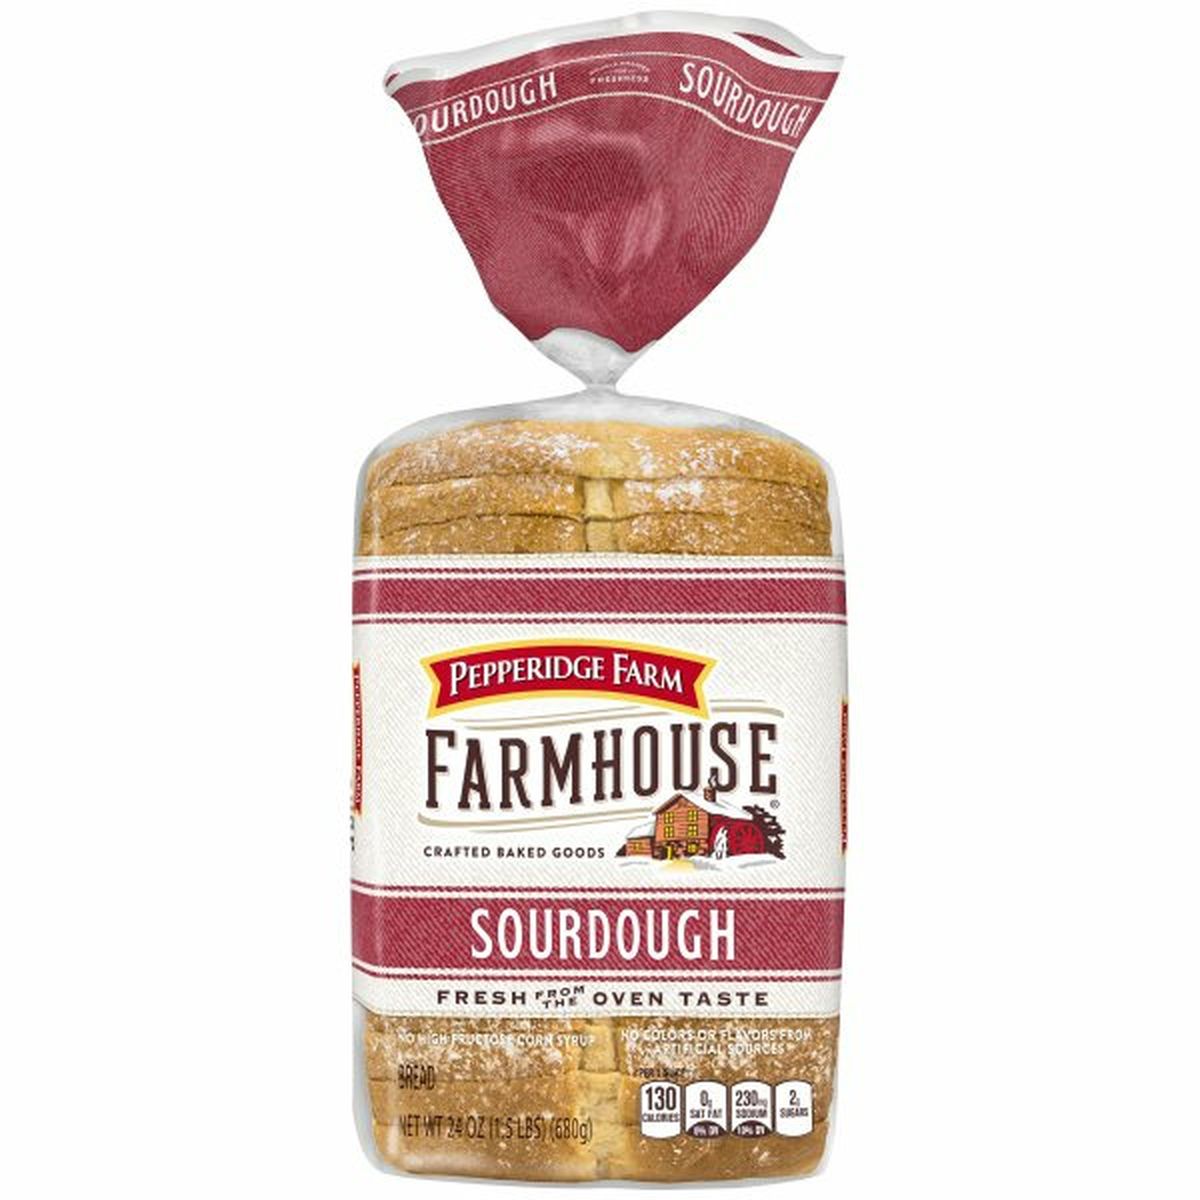 Calories in Pepperidge Farms  Farmhouse Farmhouse Sourdough Bread